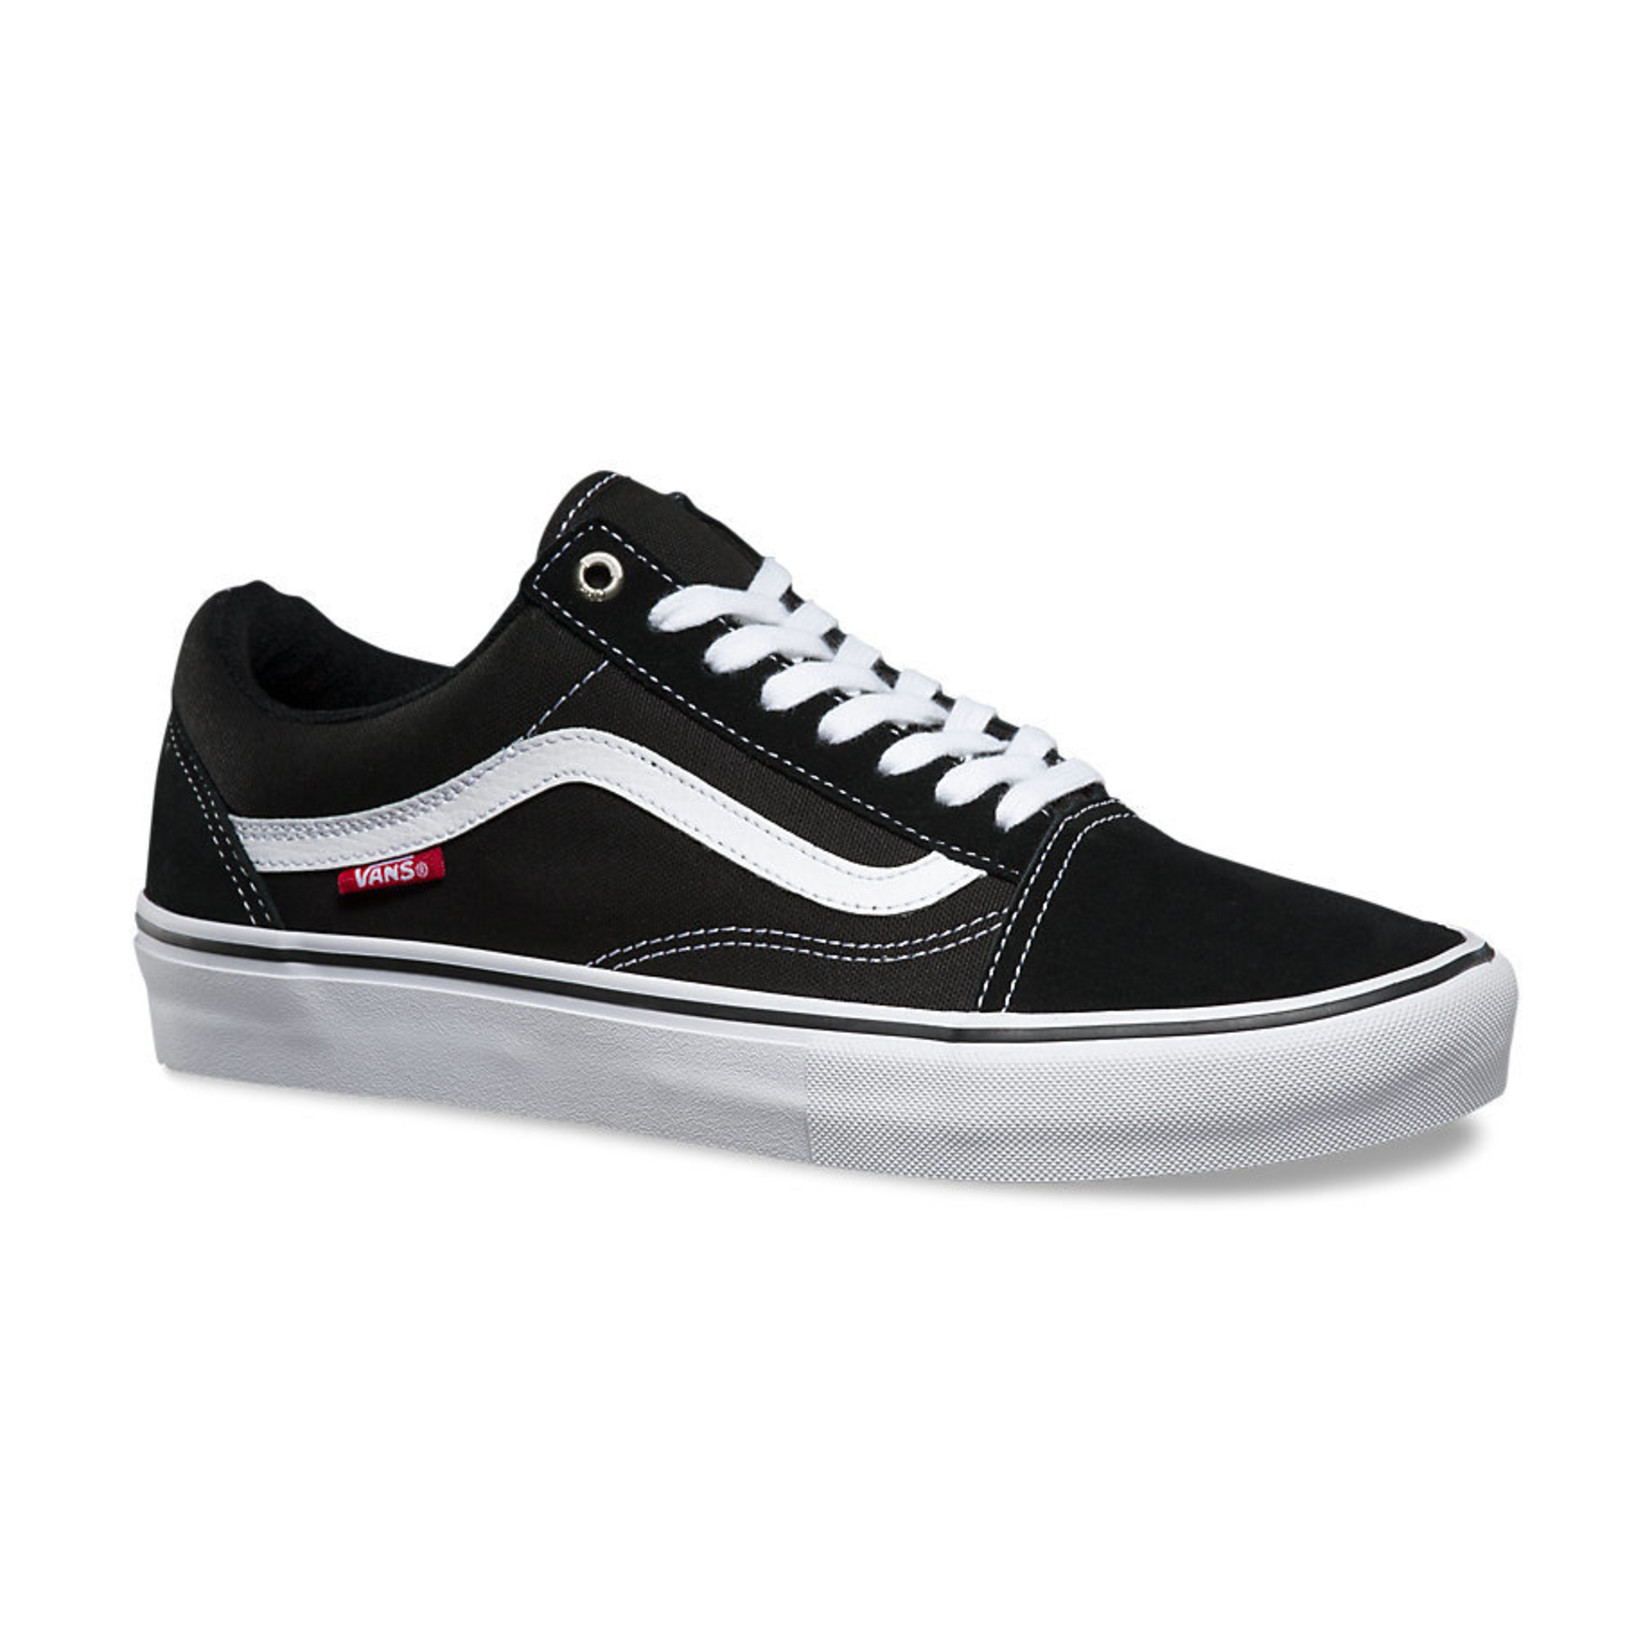 Vans Vans Old Skool Pro Skate Shoes - Black/White -